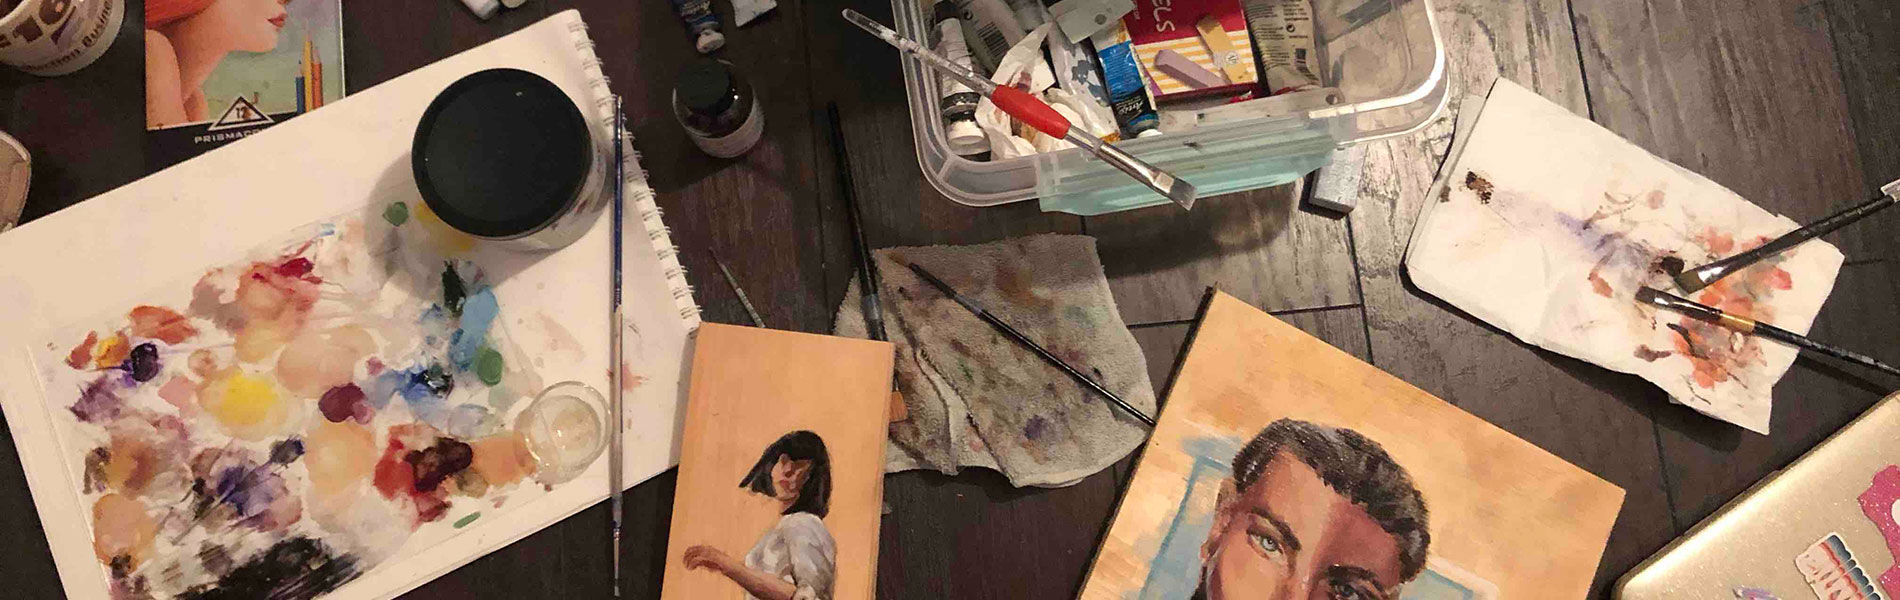 Artist's paint on a desk